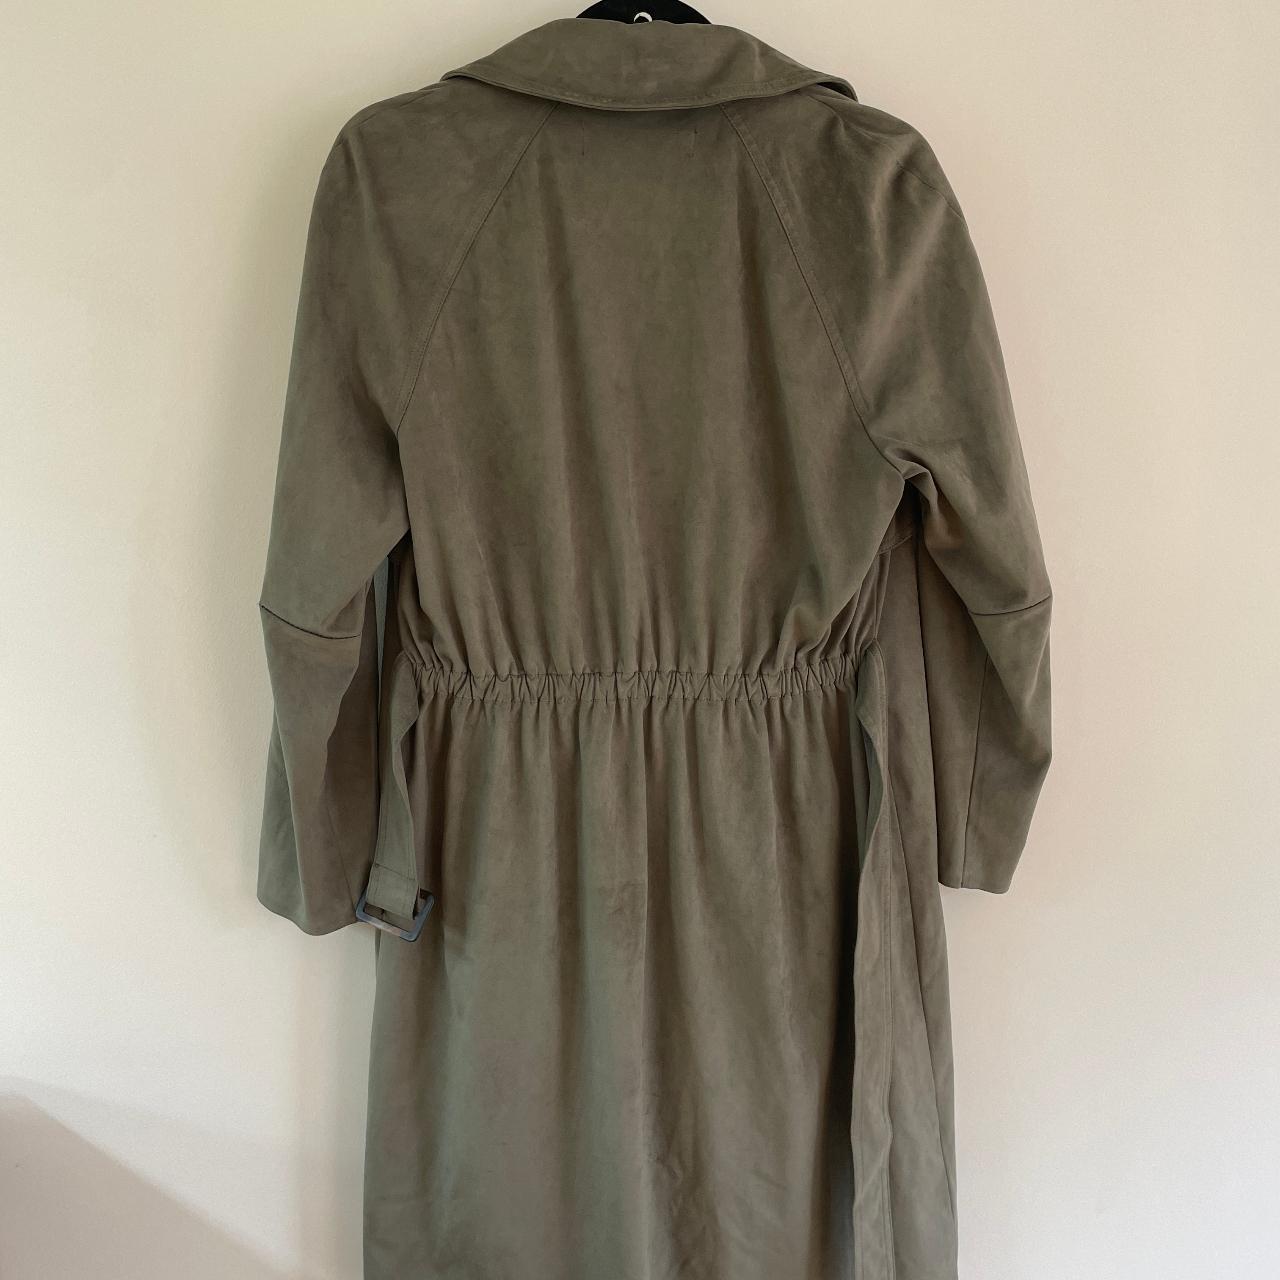 Trench Coat Zara Summer Retro Suede Long-Sleeved... - Depop